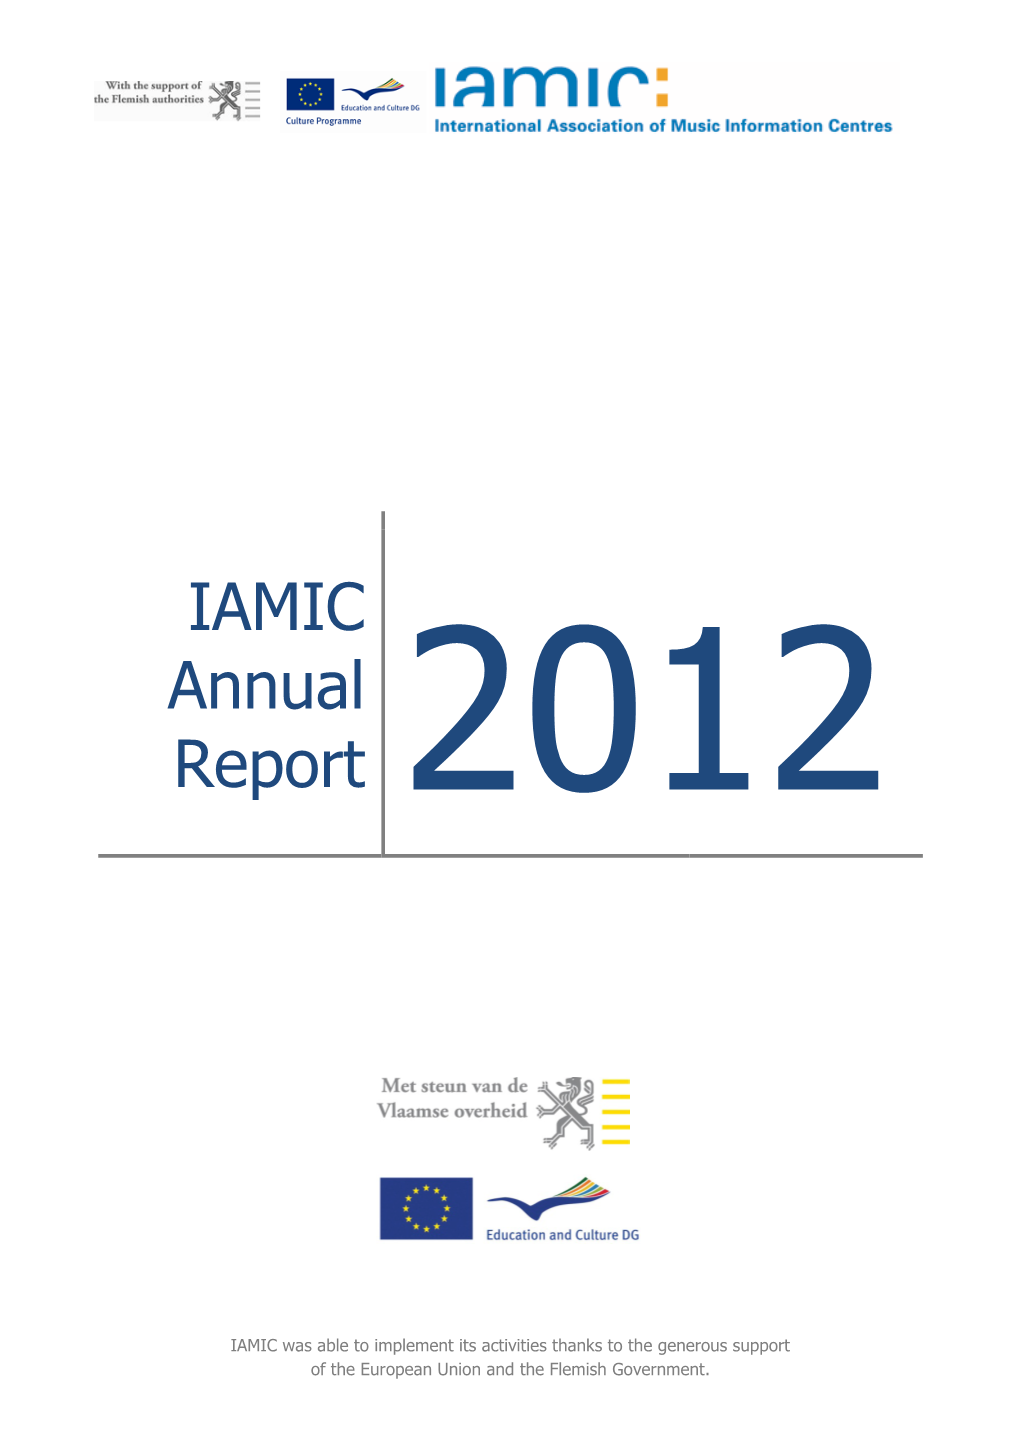 IAMIC Annual Report 2012